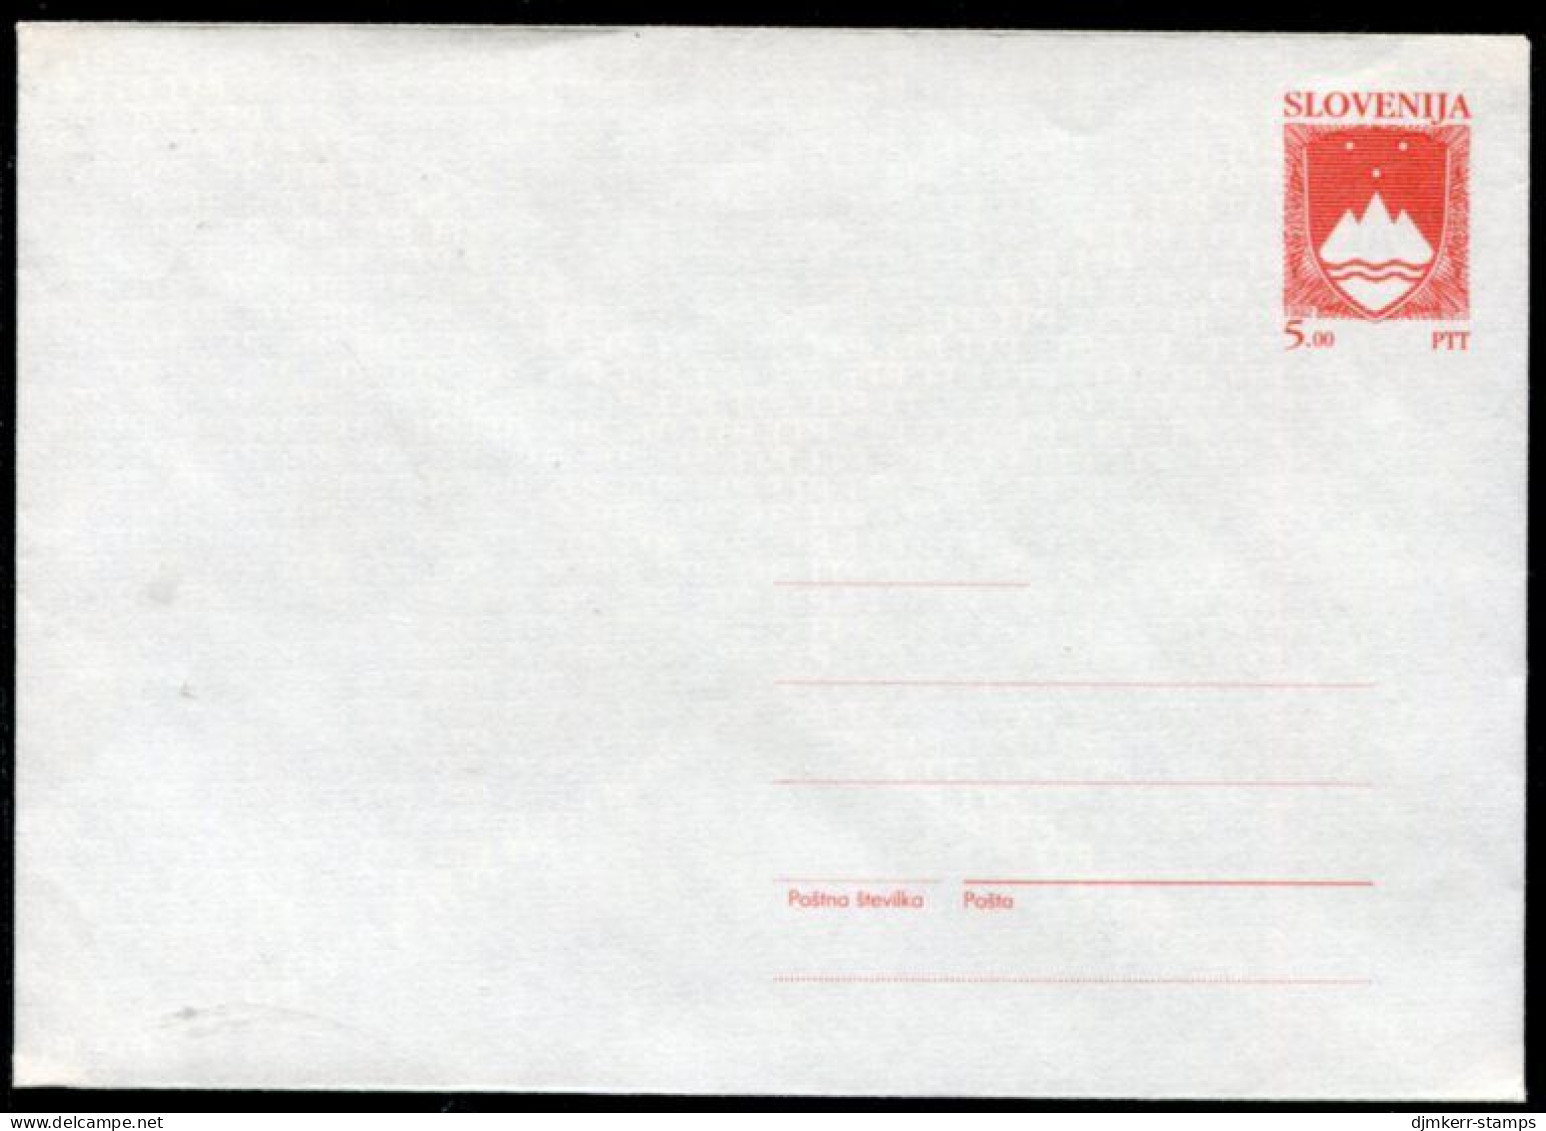 SLOVENIA 1992 5.00 T.  Postal Stationery Envelope On White Paper, Unused.  Michel U1a - Slowenien